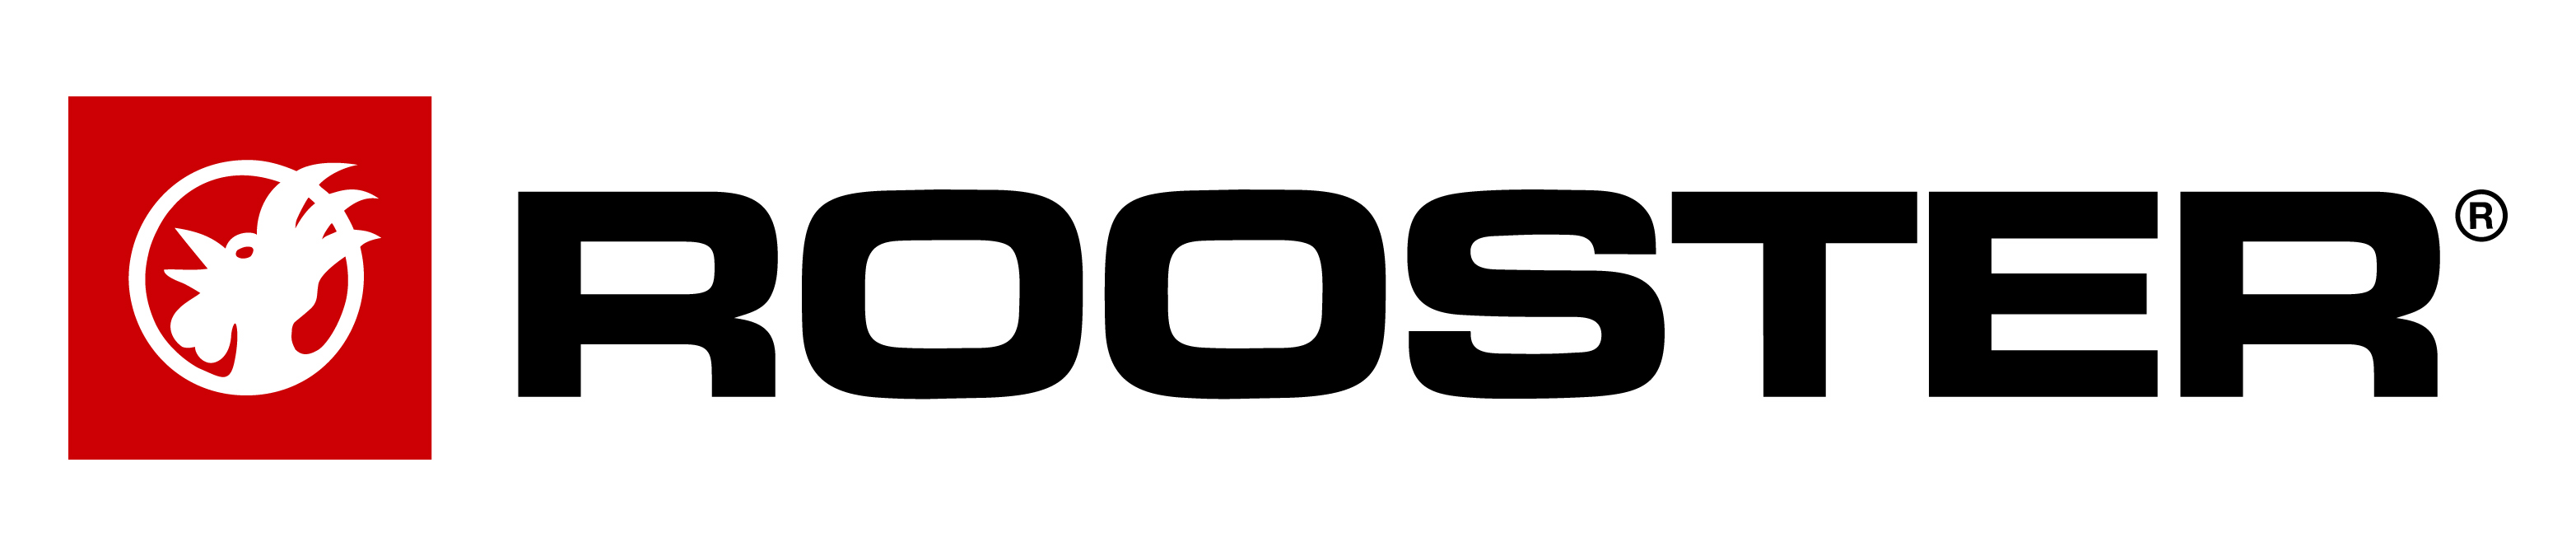 Rooster_Logo.jpeg